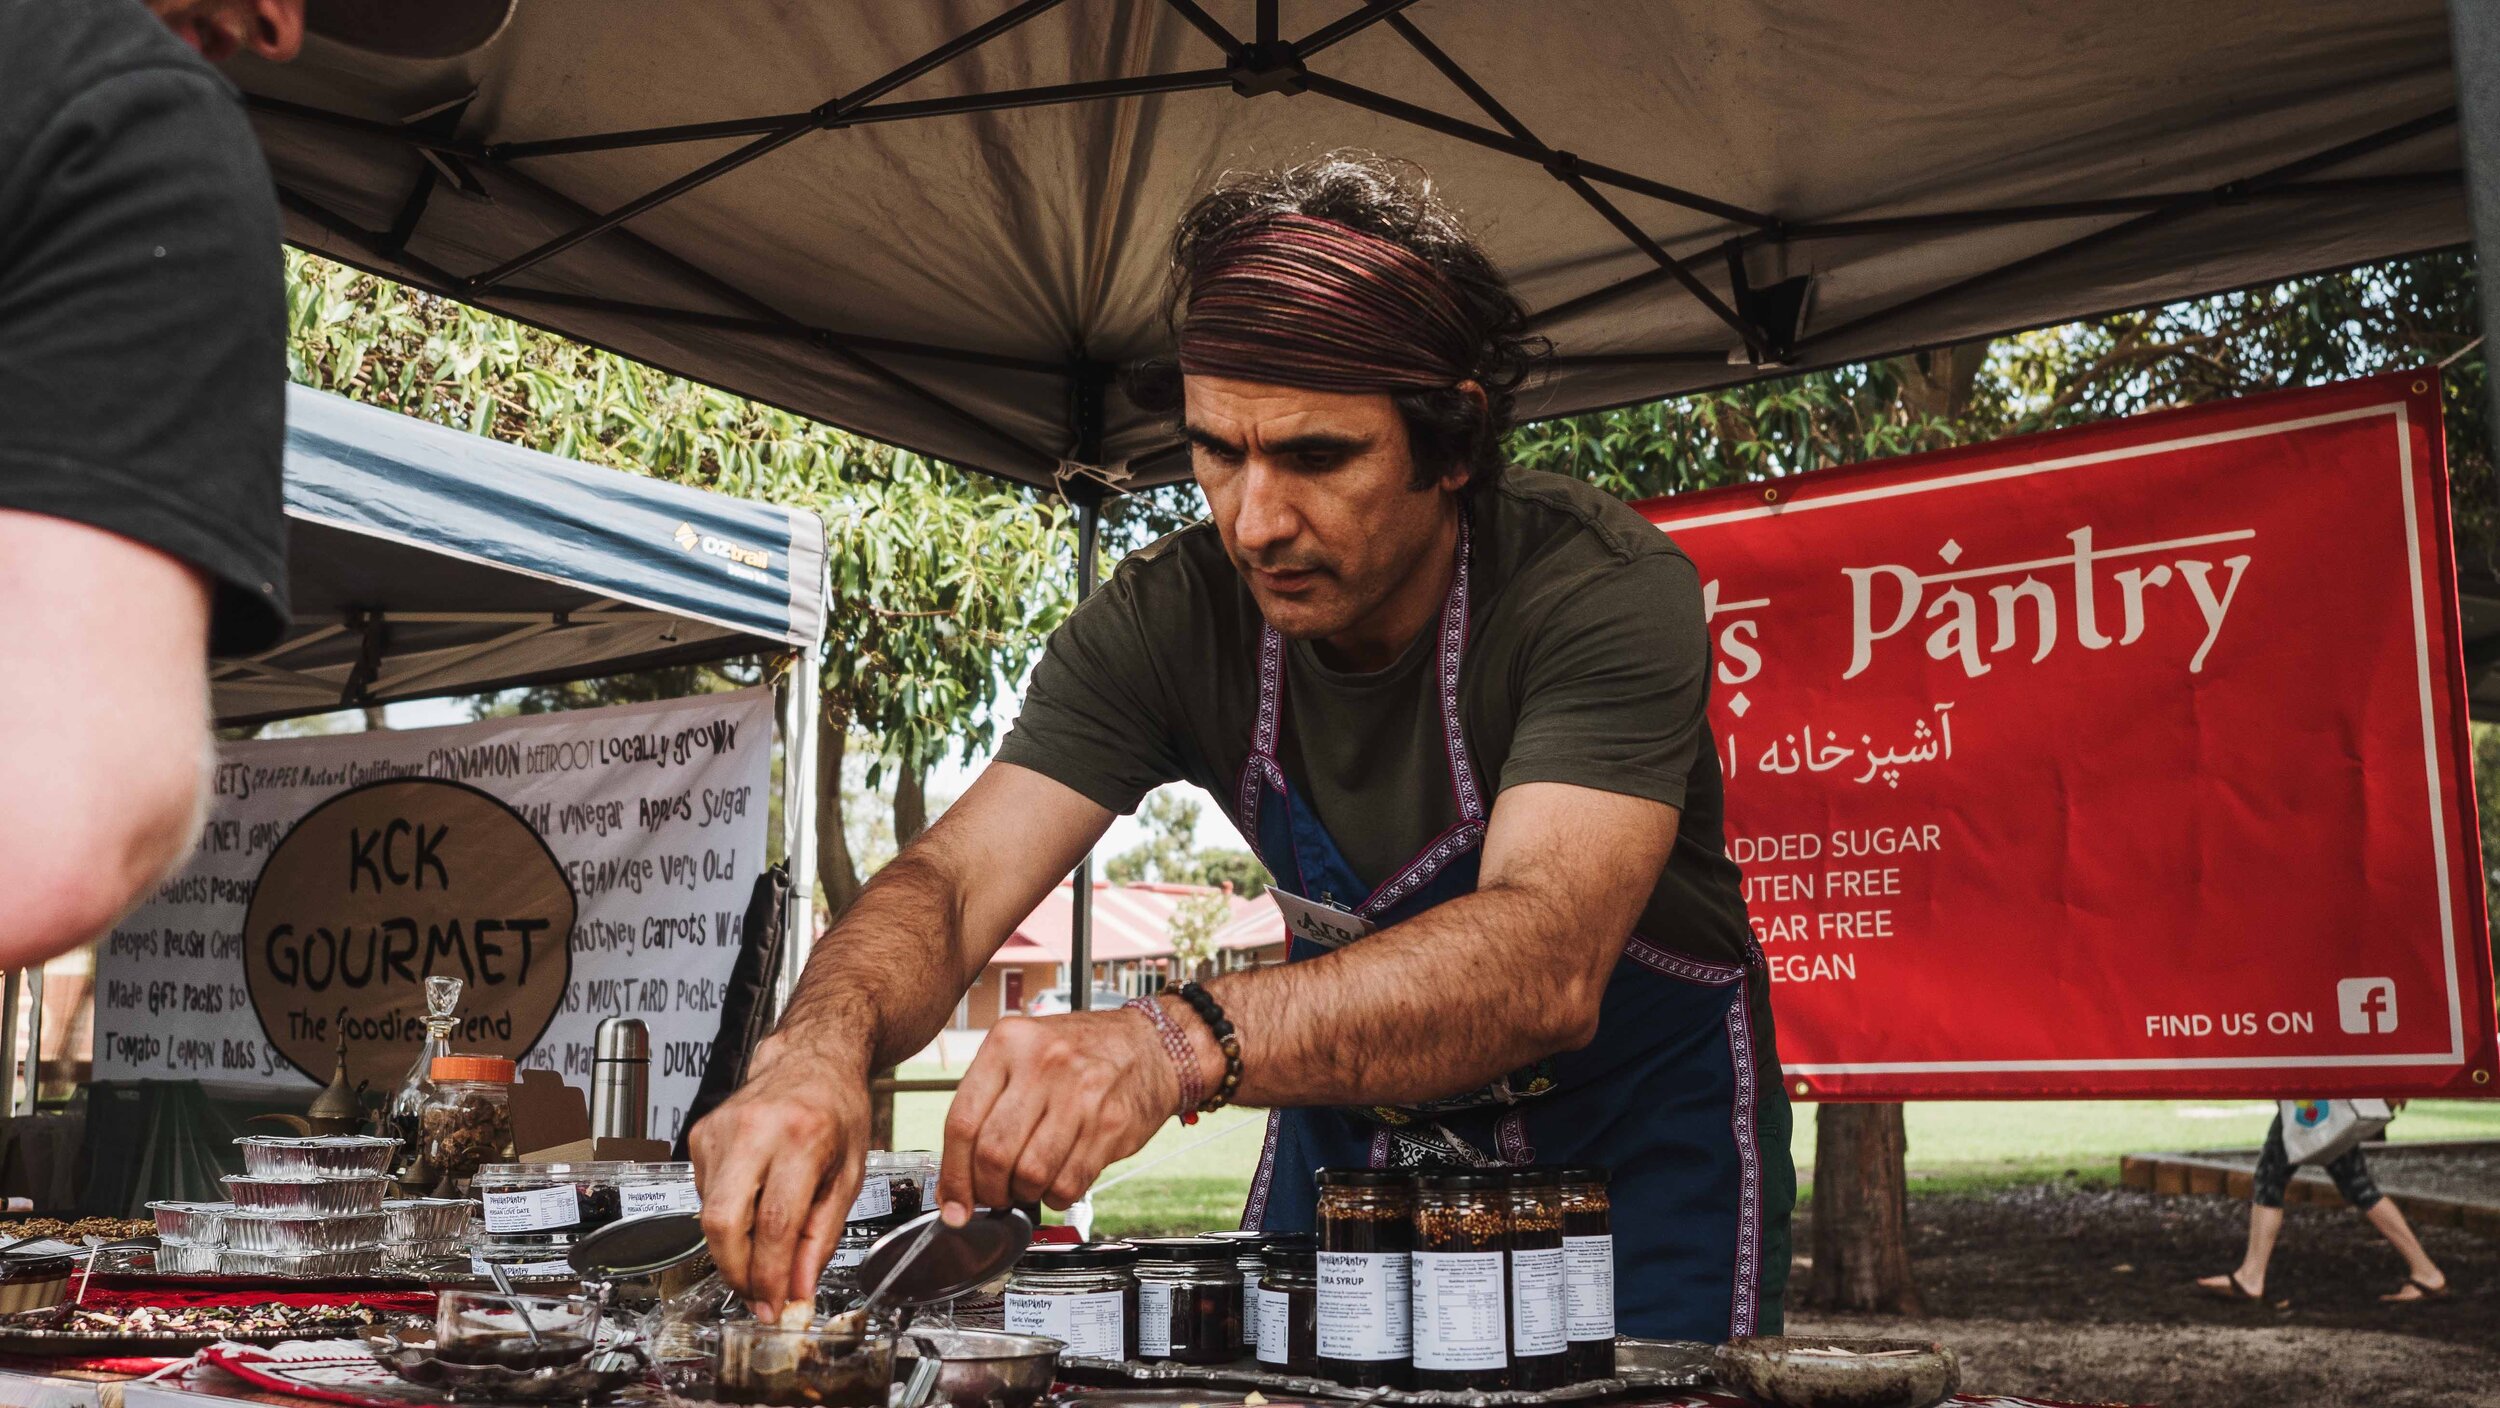  Arad Niksefat attends Farmers Markets across Perth selling his Persian food. 